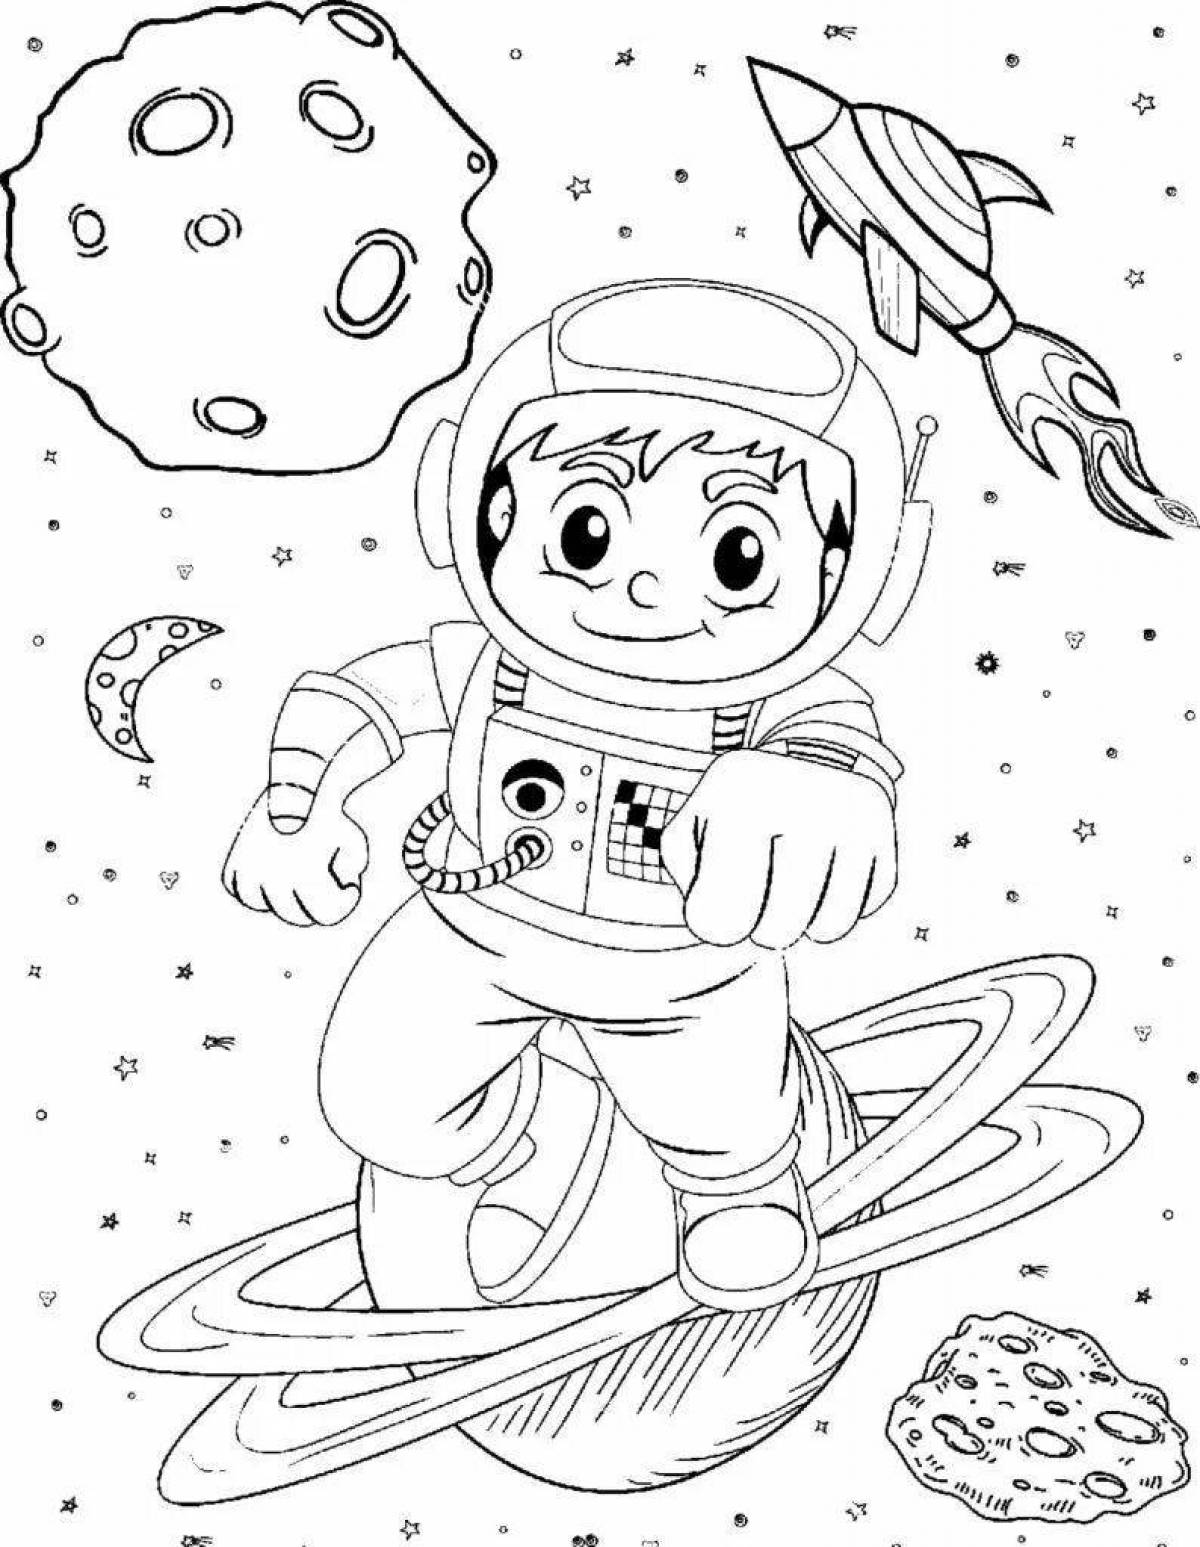 Cosmonaut for kids #16